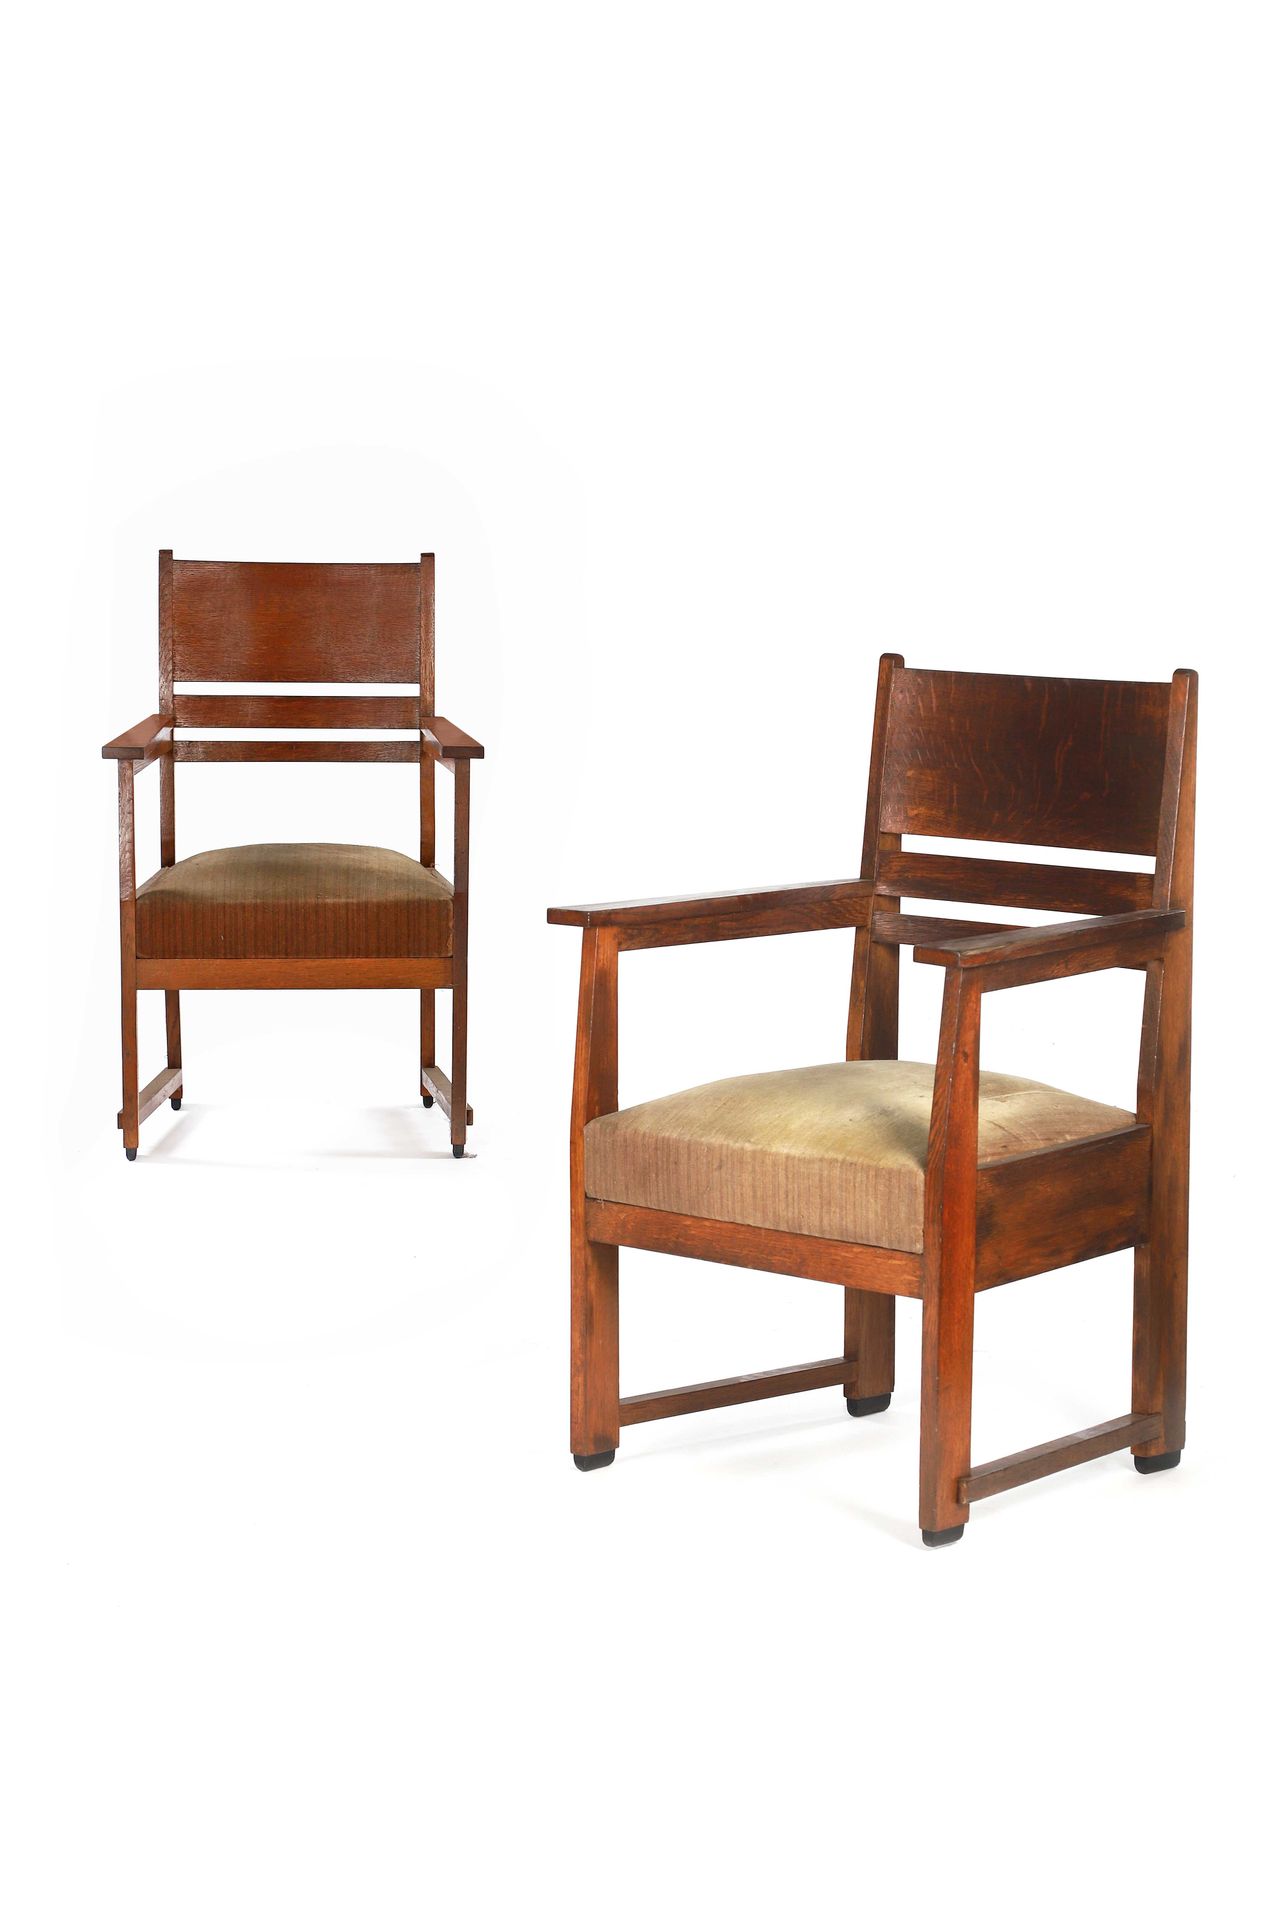 Null 亨德里克-伍达（1885-1946）归于

一对扶手椅 黑化橡木，天鹅绒 102 x 65 x 58 cm.约1920年

2张休闲椅 橡木，油漆木，&hellip;